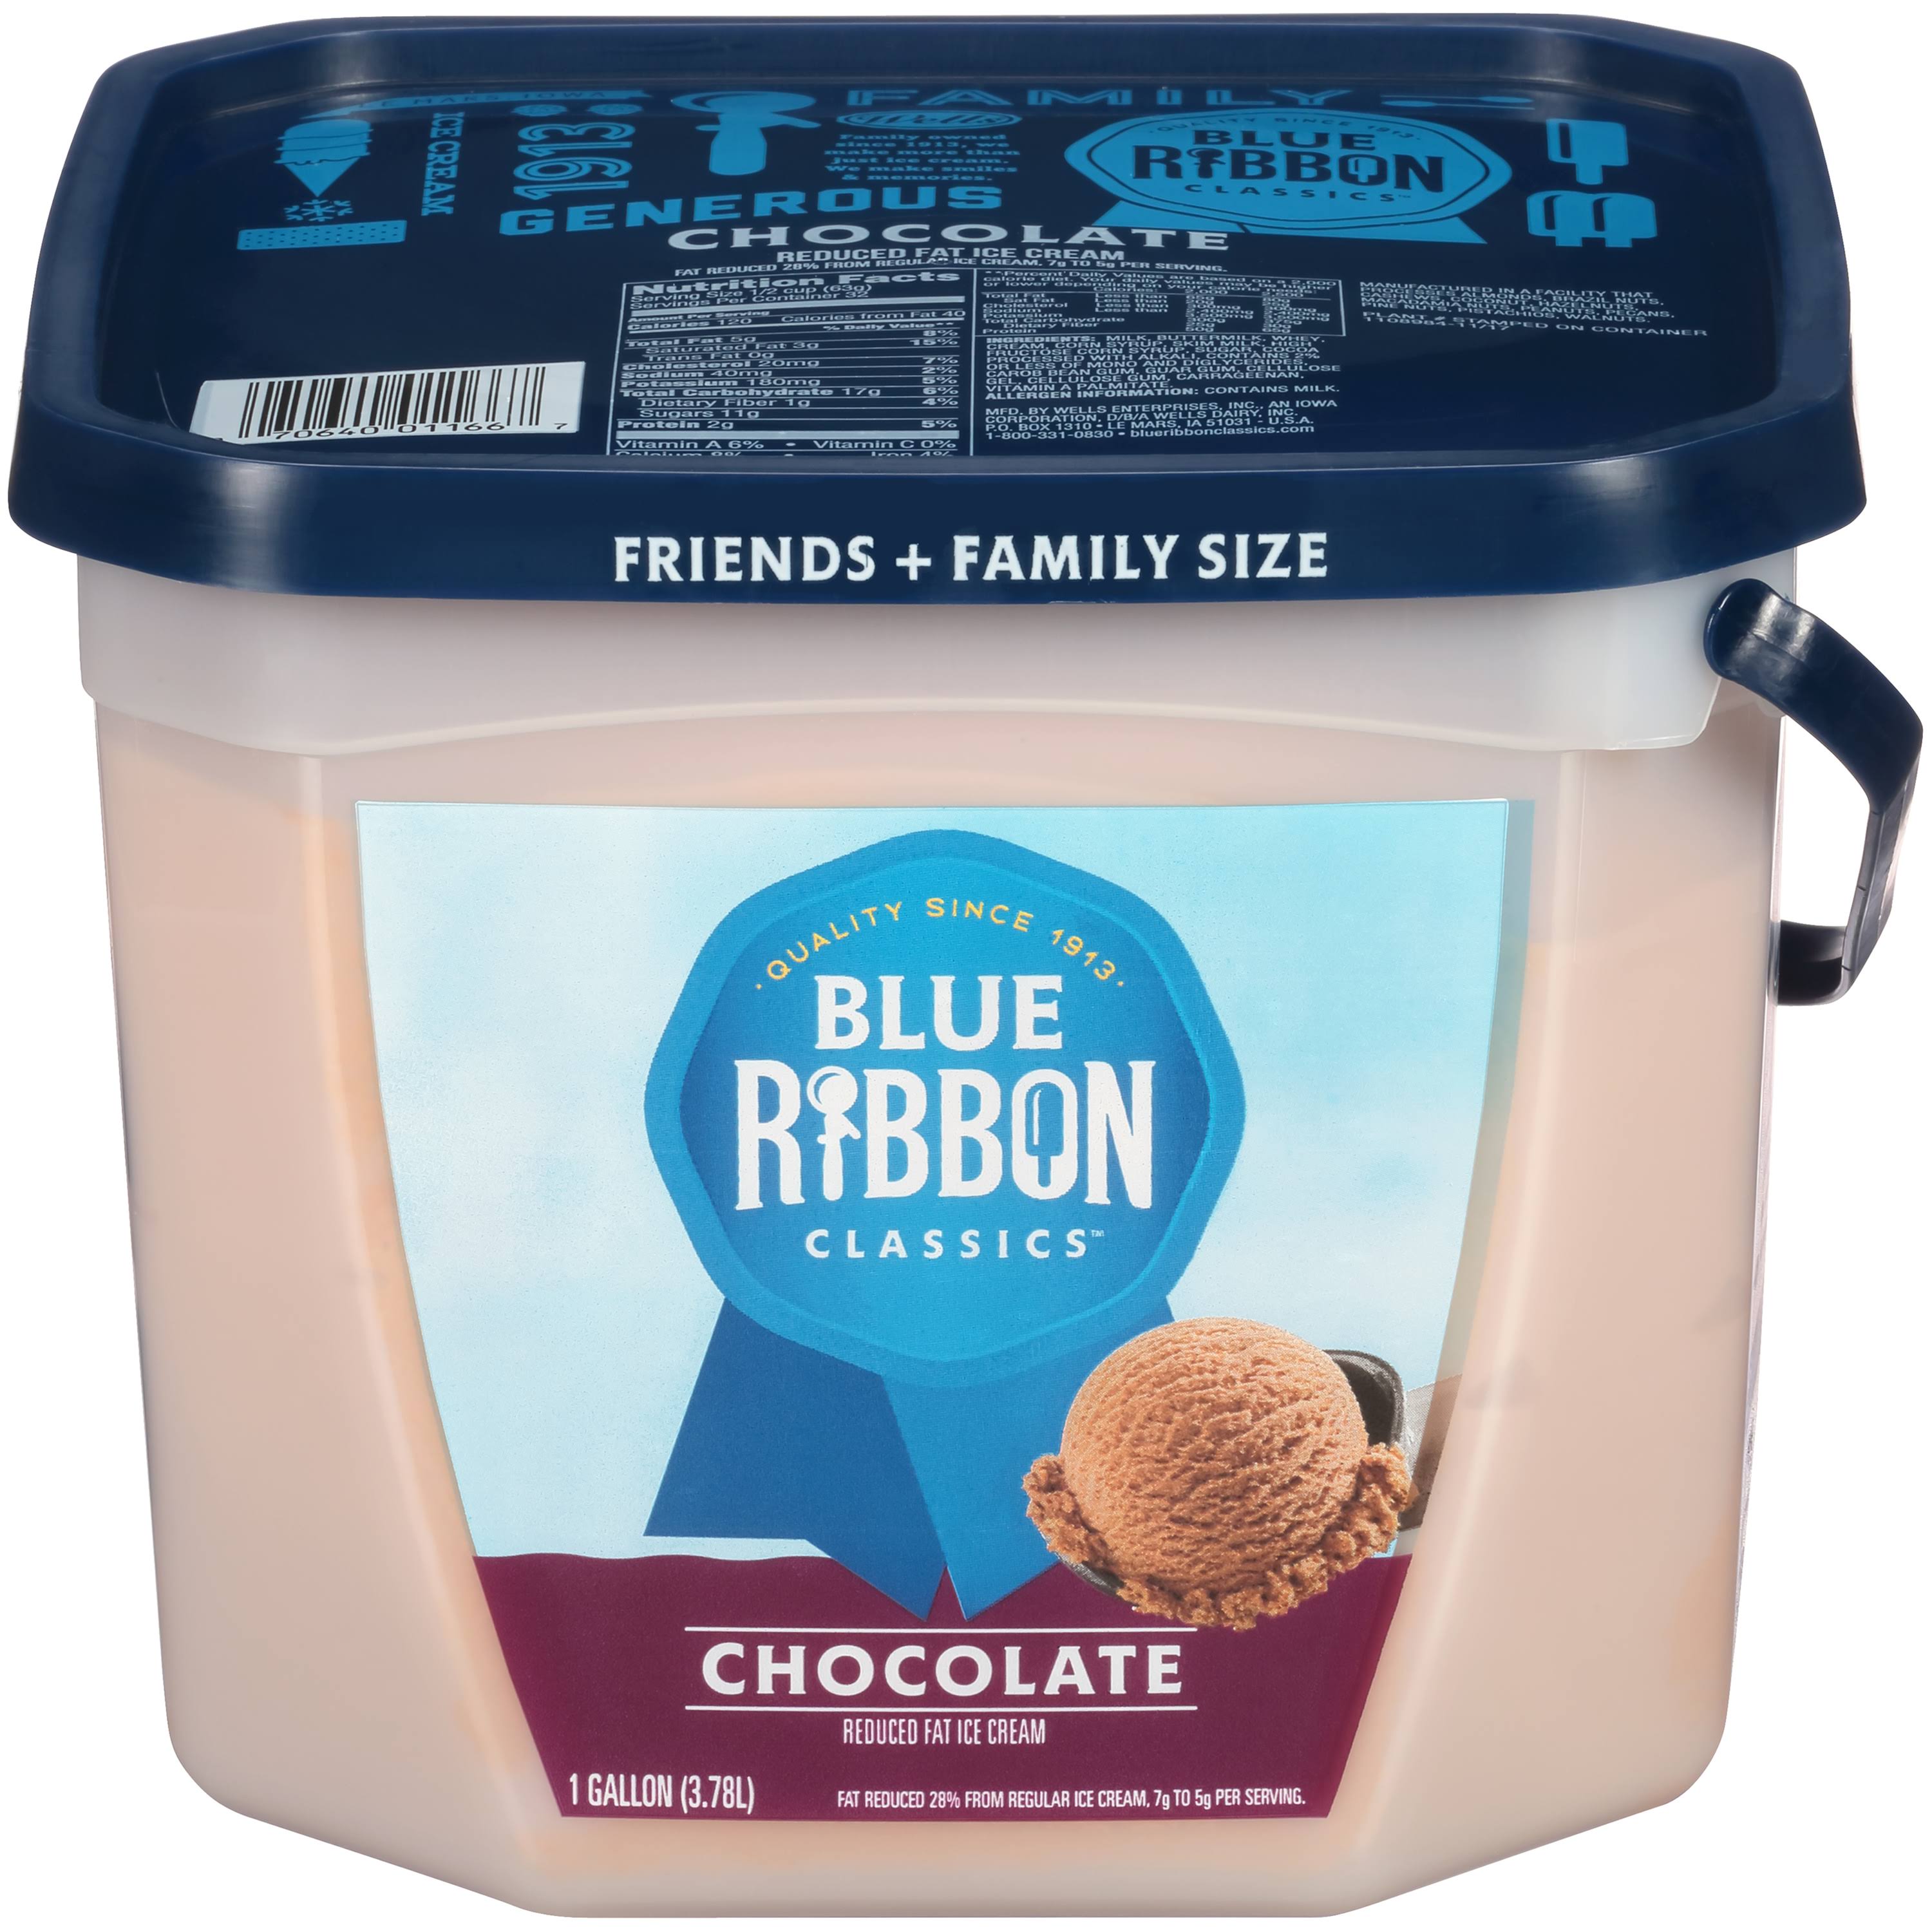 Blue Ribbon Classics Ice Cream, Reduced Fat, Chocolate, Friends + Family Size - 1 gallon (3.78 l)